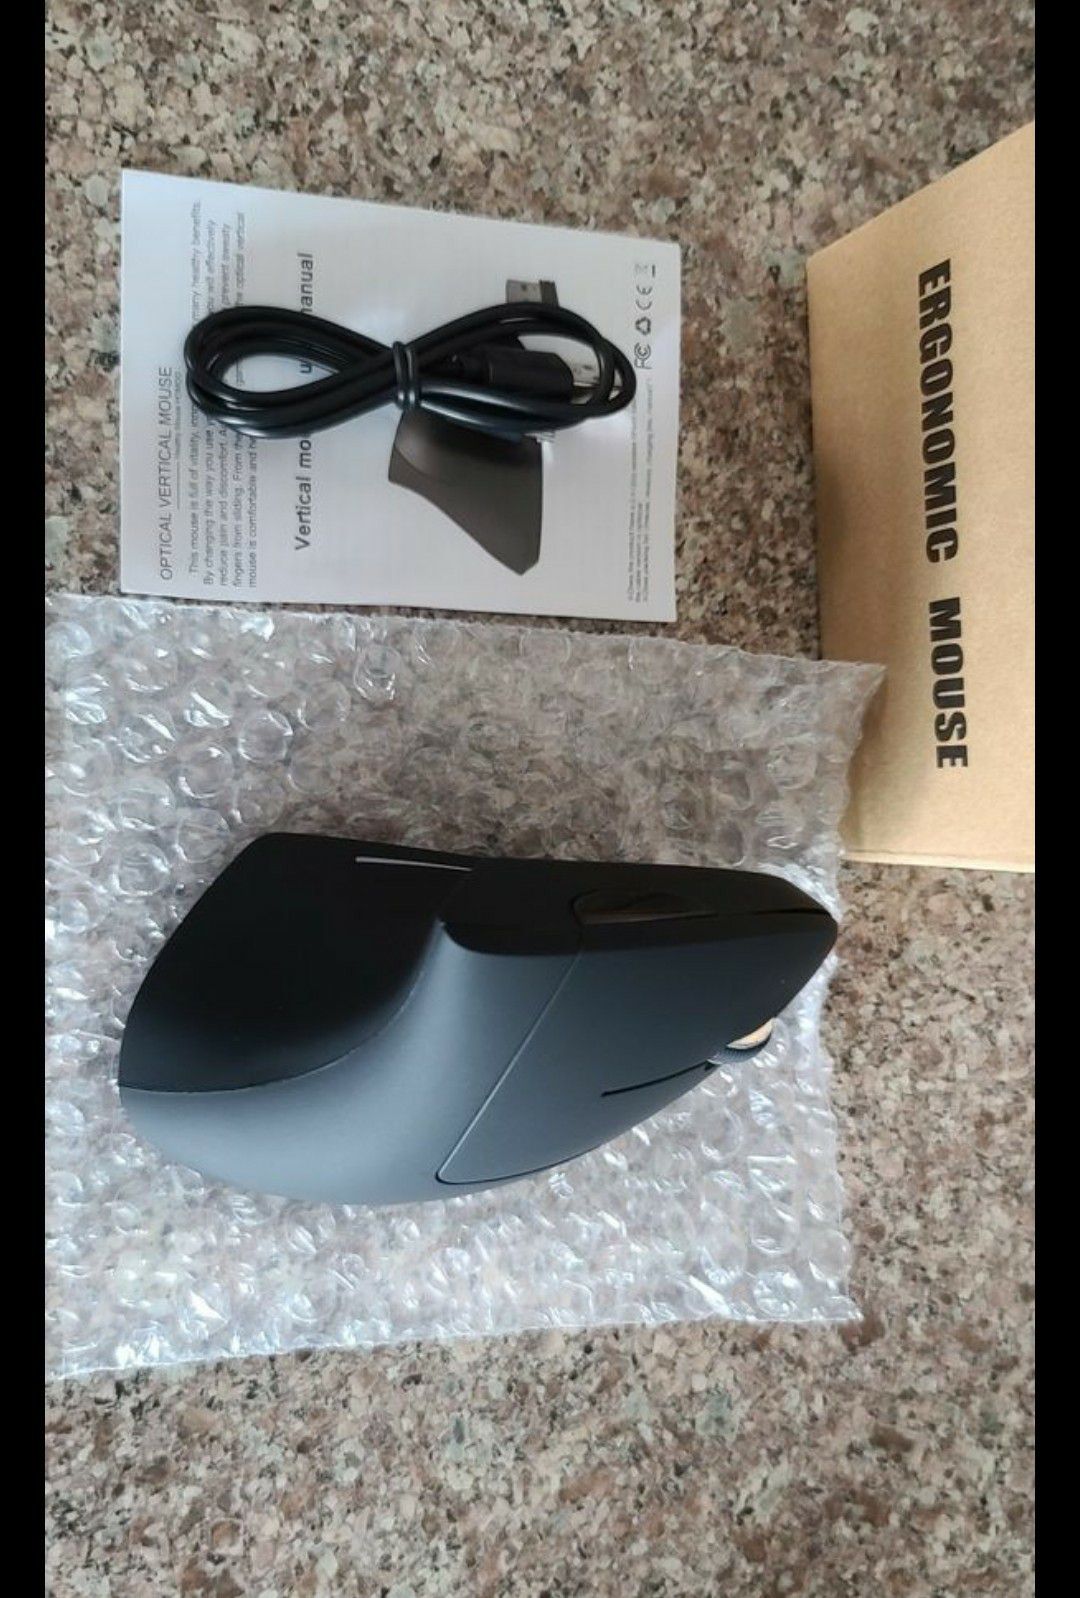 New Ergonomic Mouse Wireless